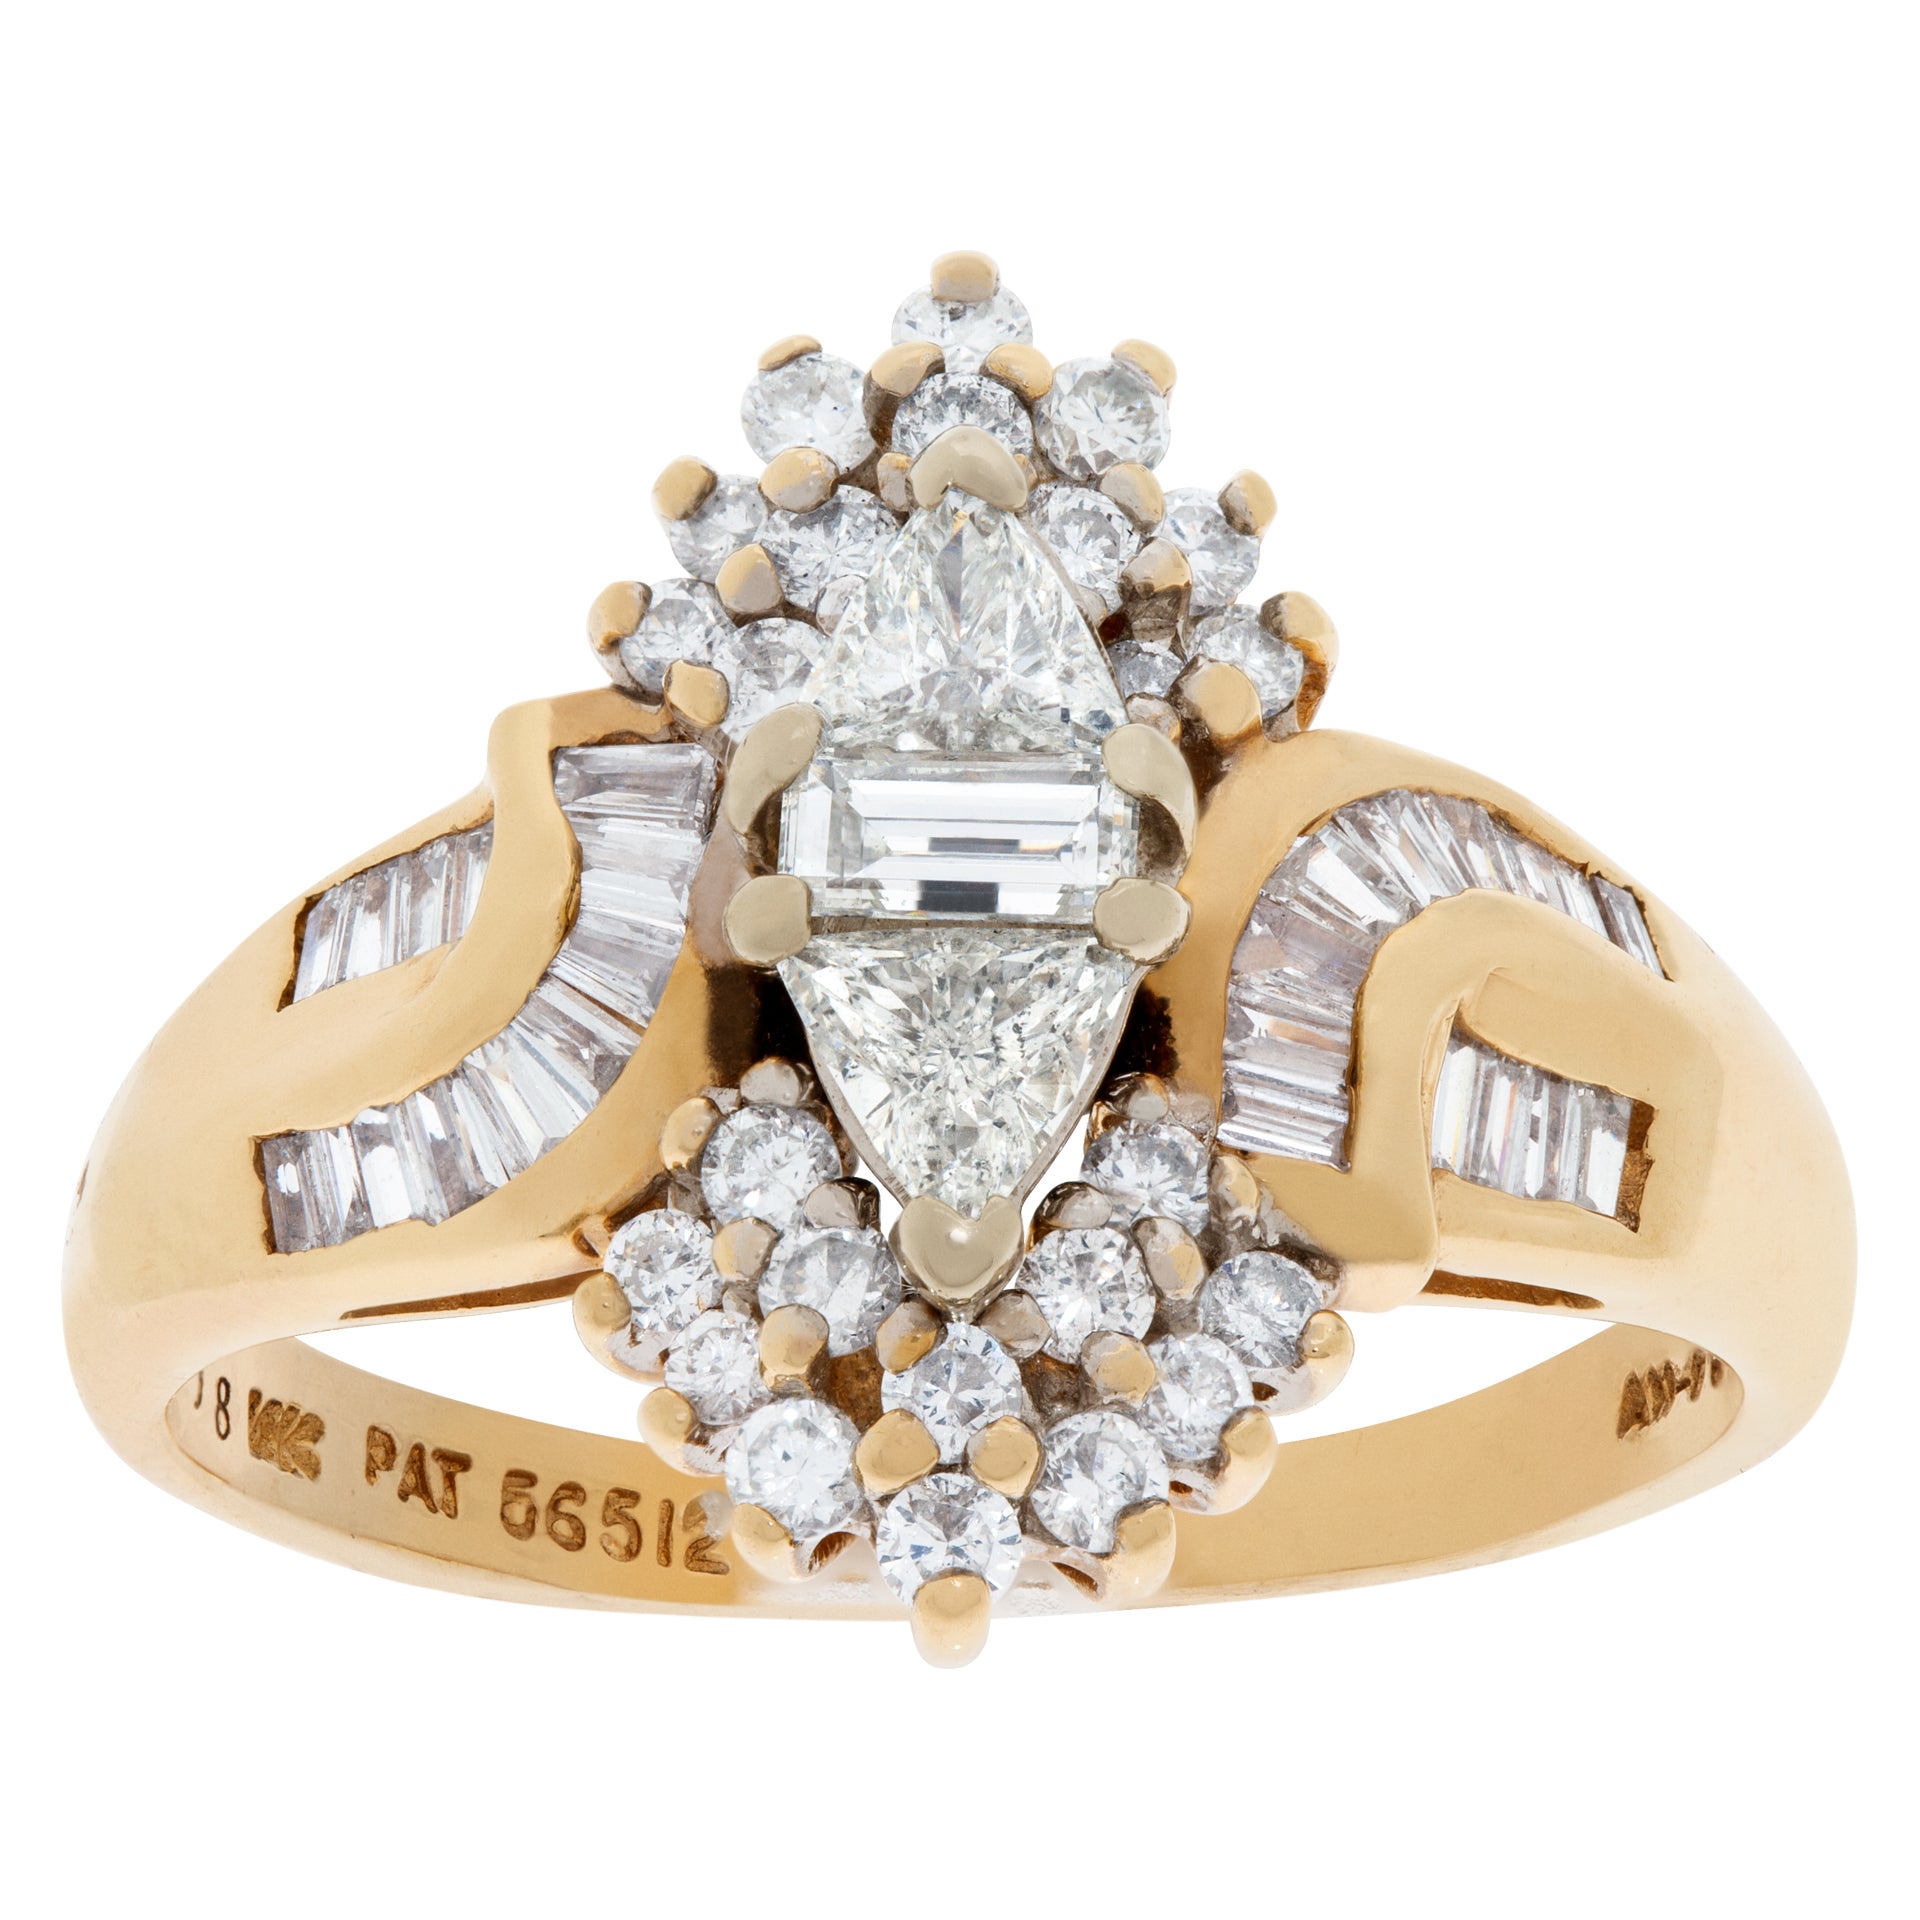 Diamond Ring in 14k Yellow Gold. Fashion "Ballerina" Style, 0.65 Carats